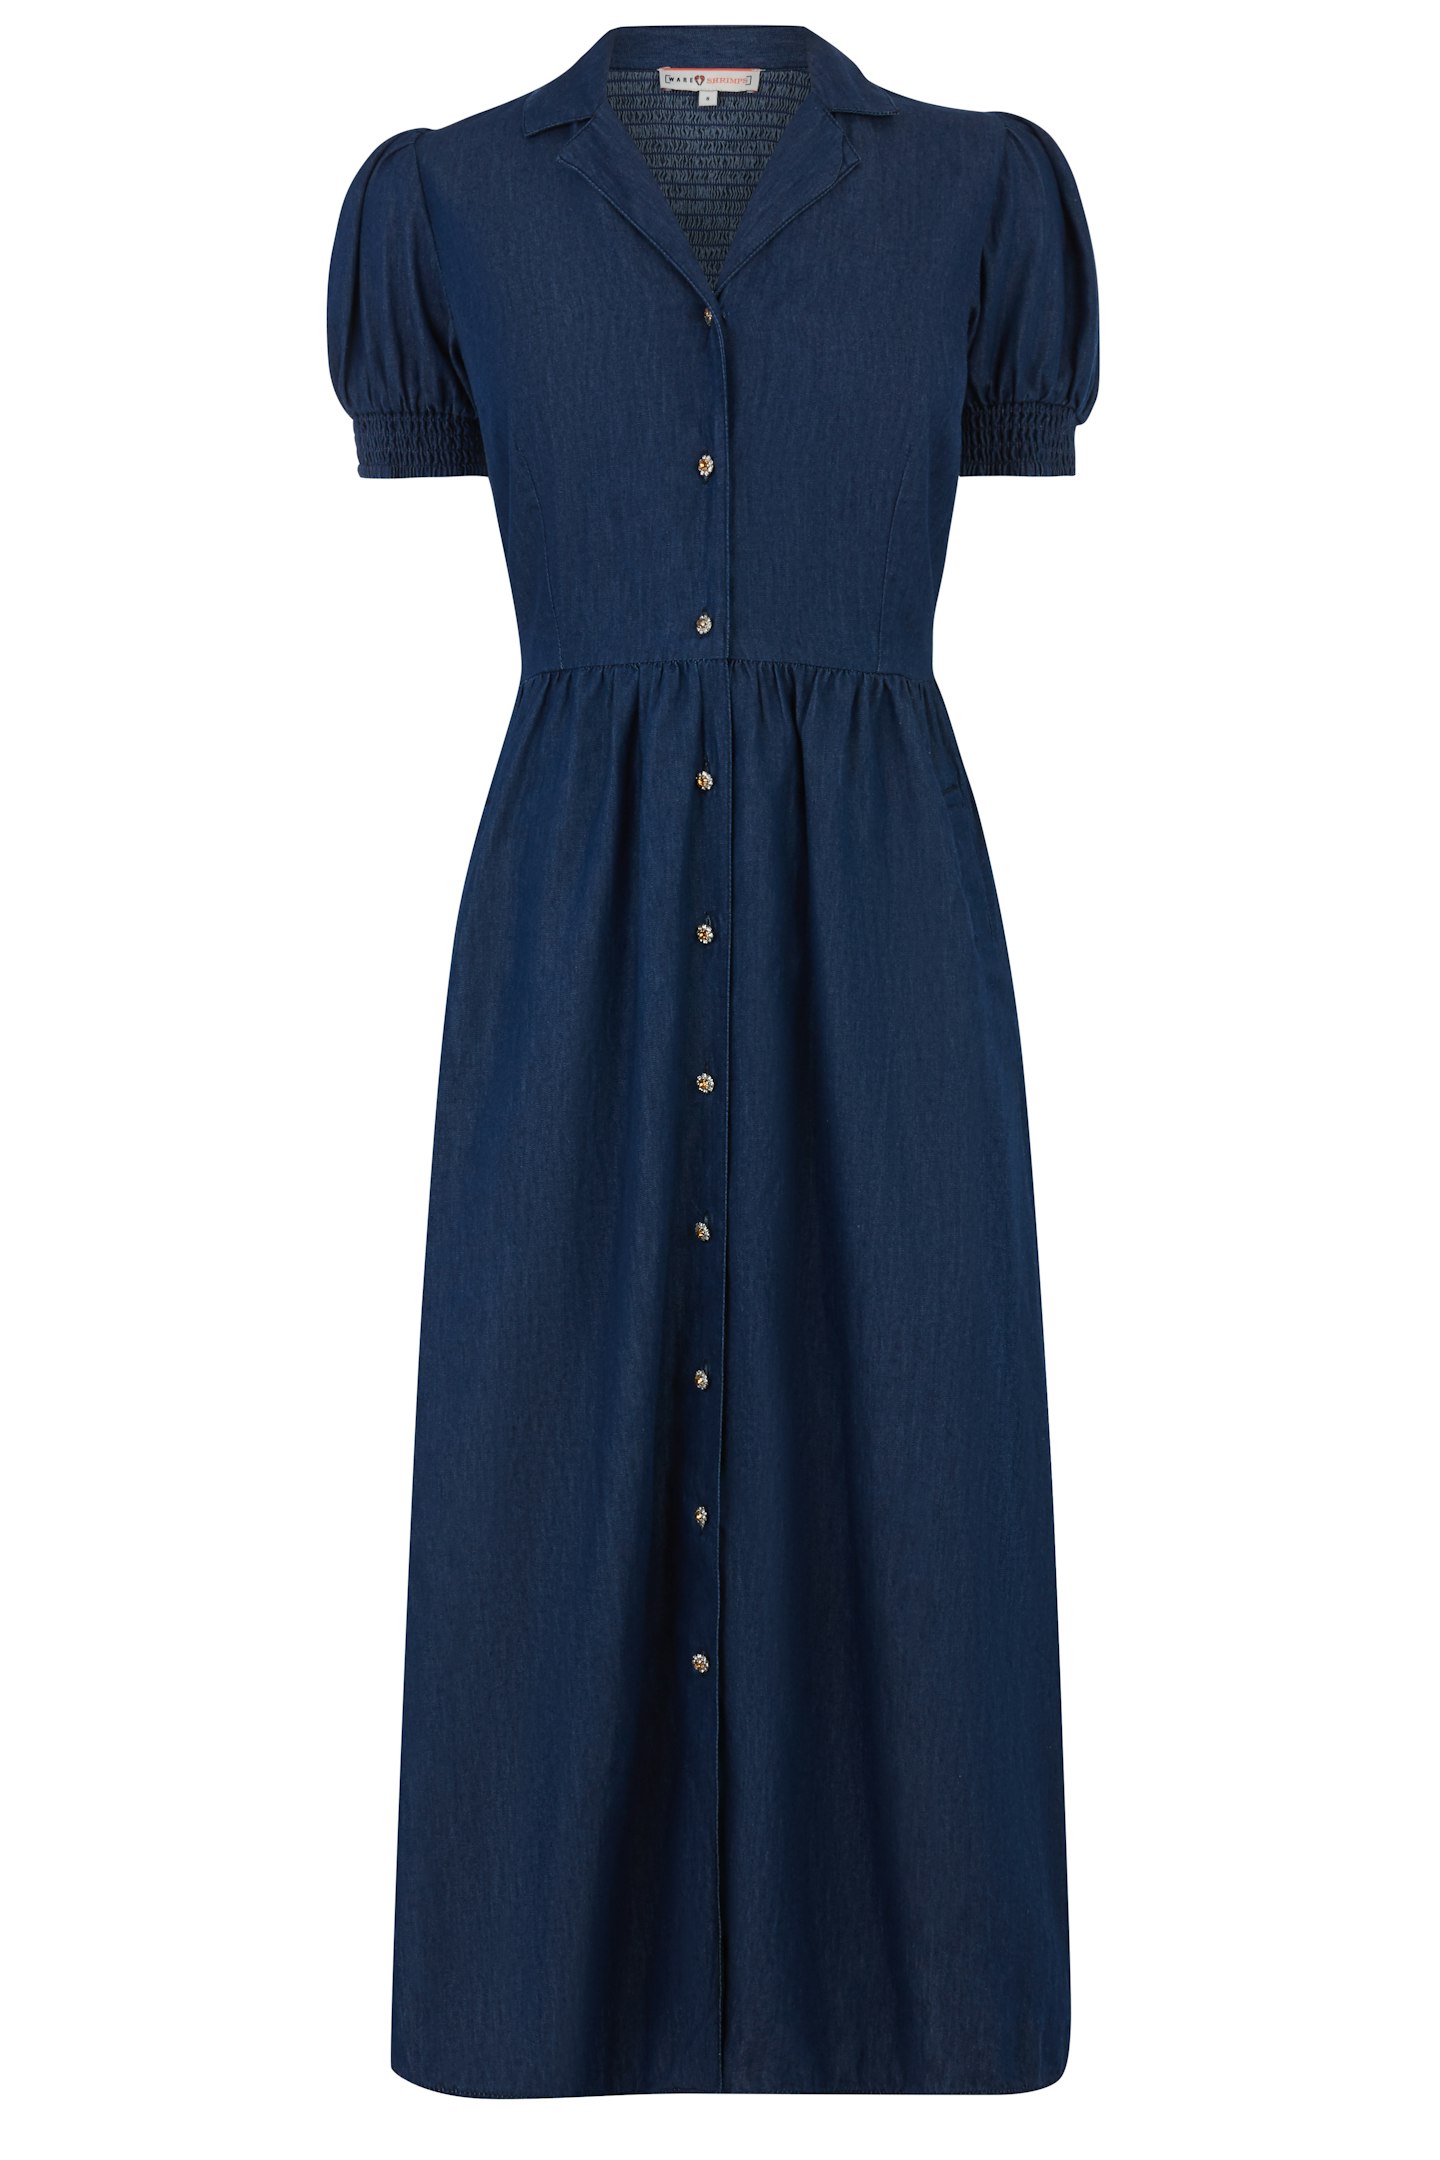 Denim Midi Dress, £69